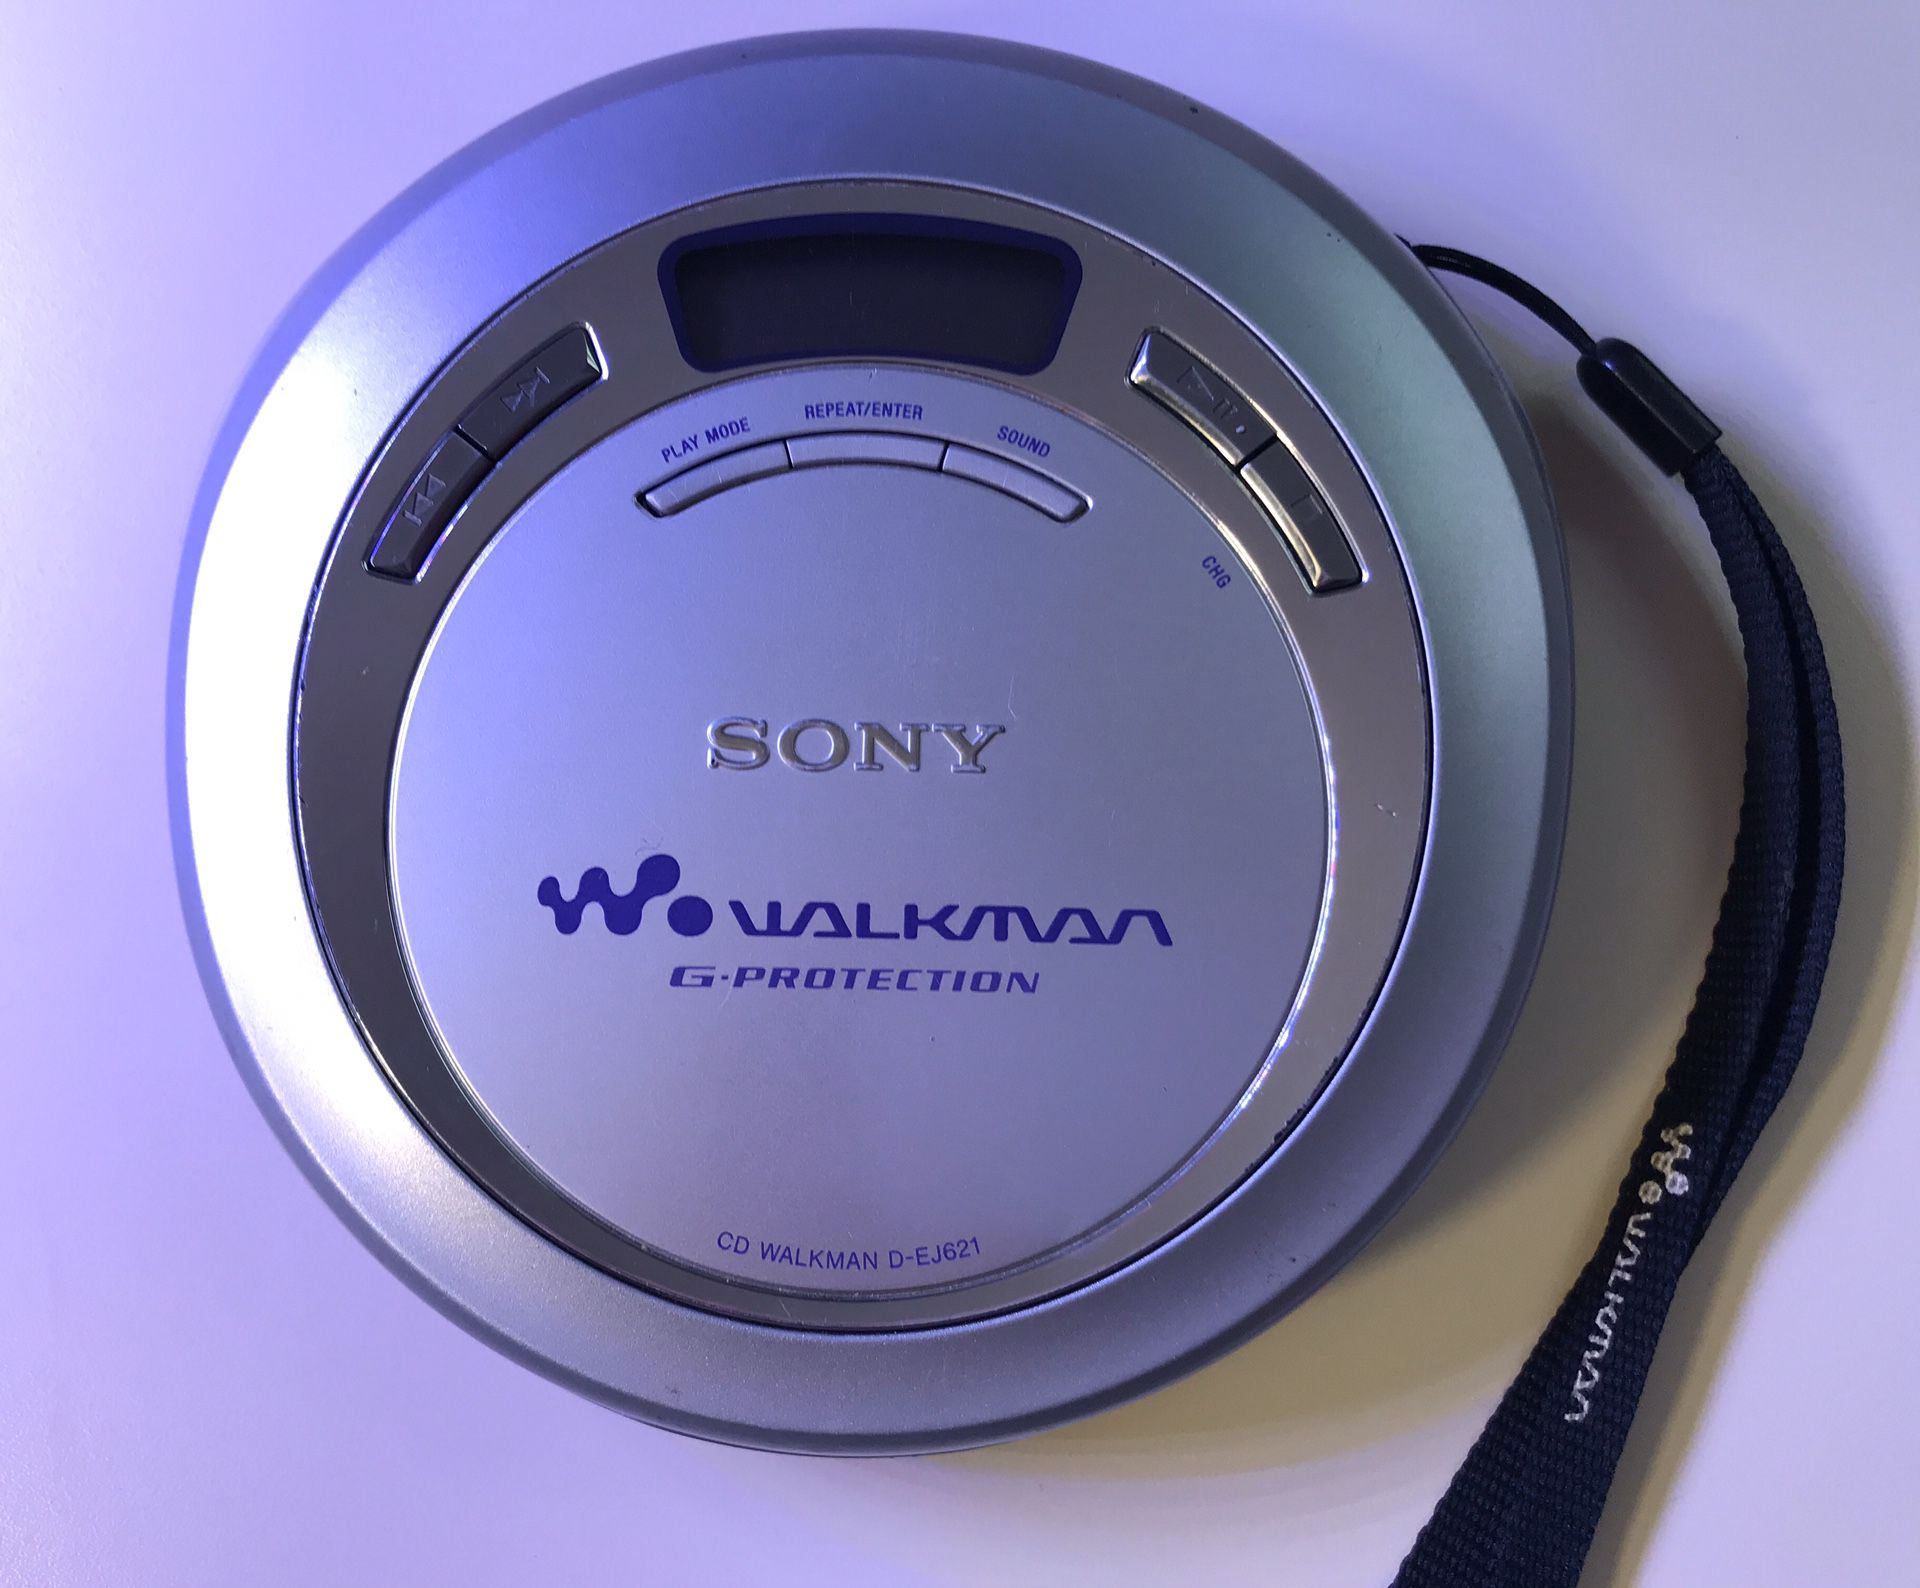 SONY D-EJ621 CD Walkman G-Protection Portable CD Player